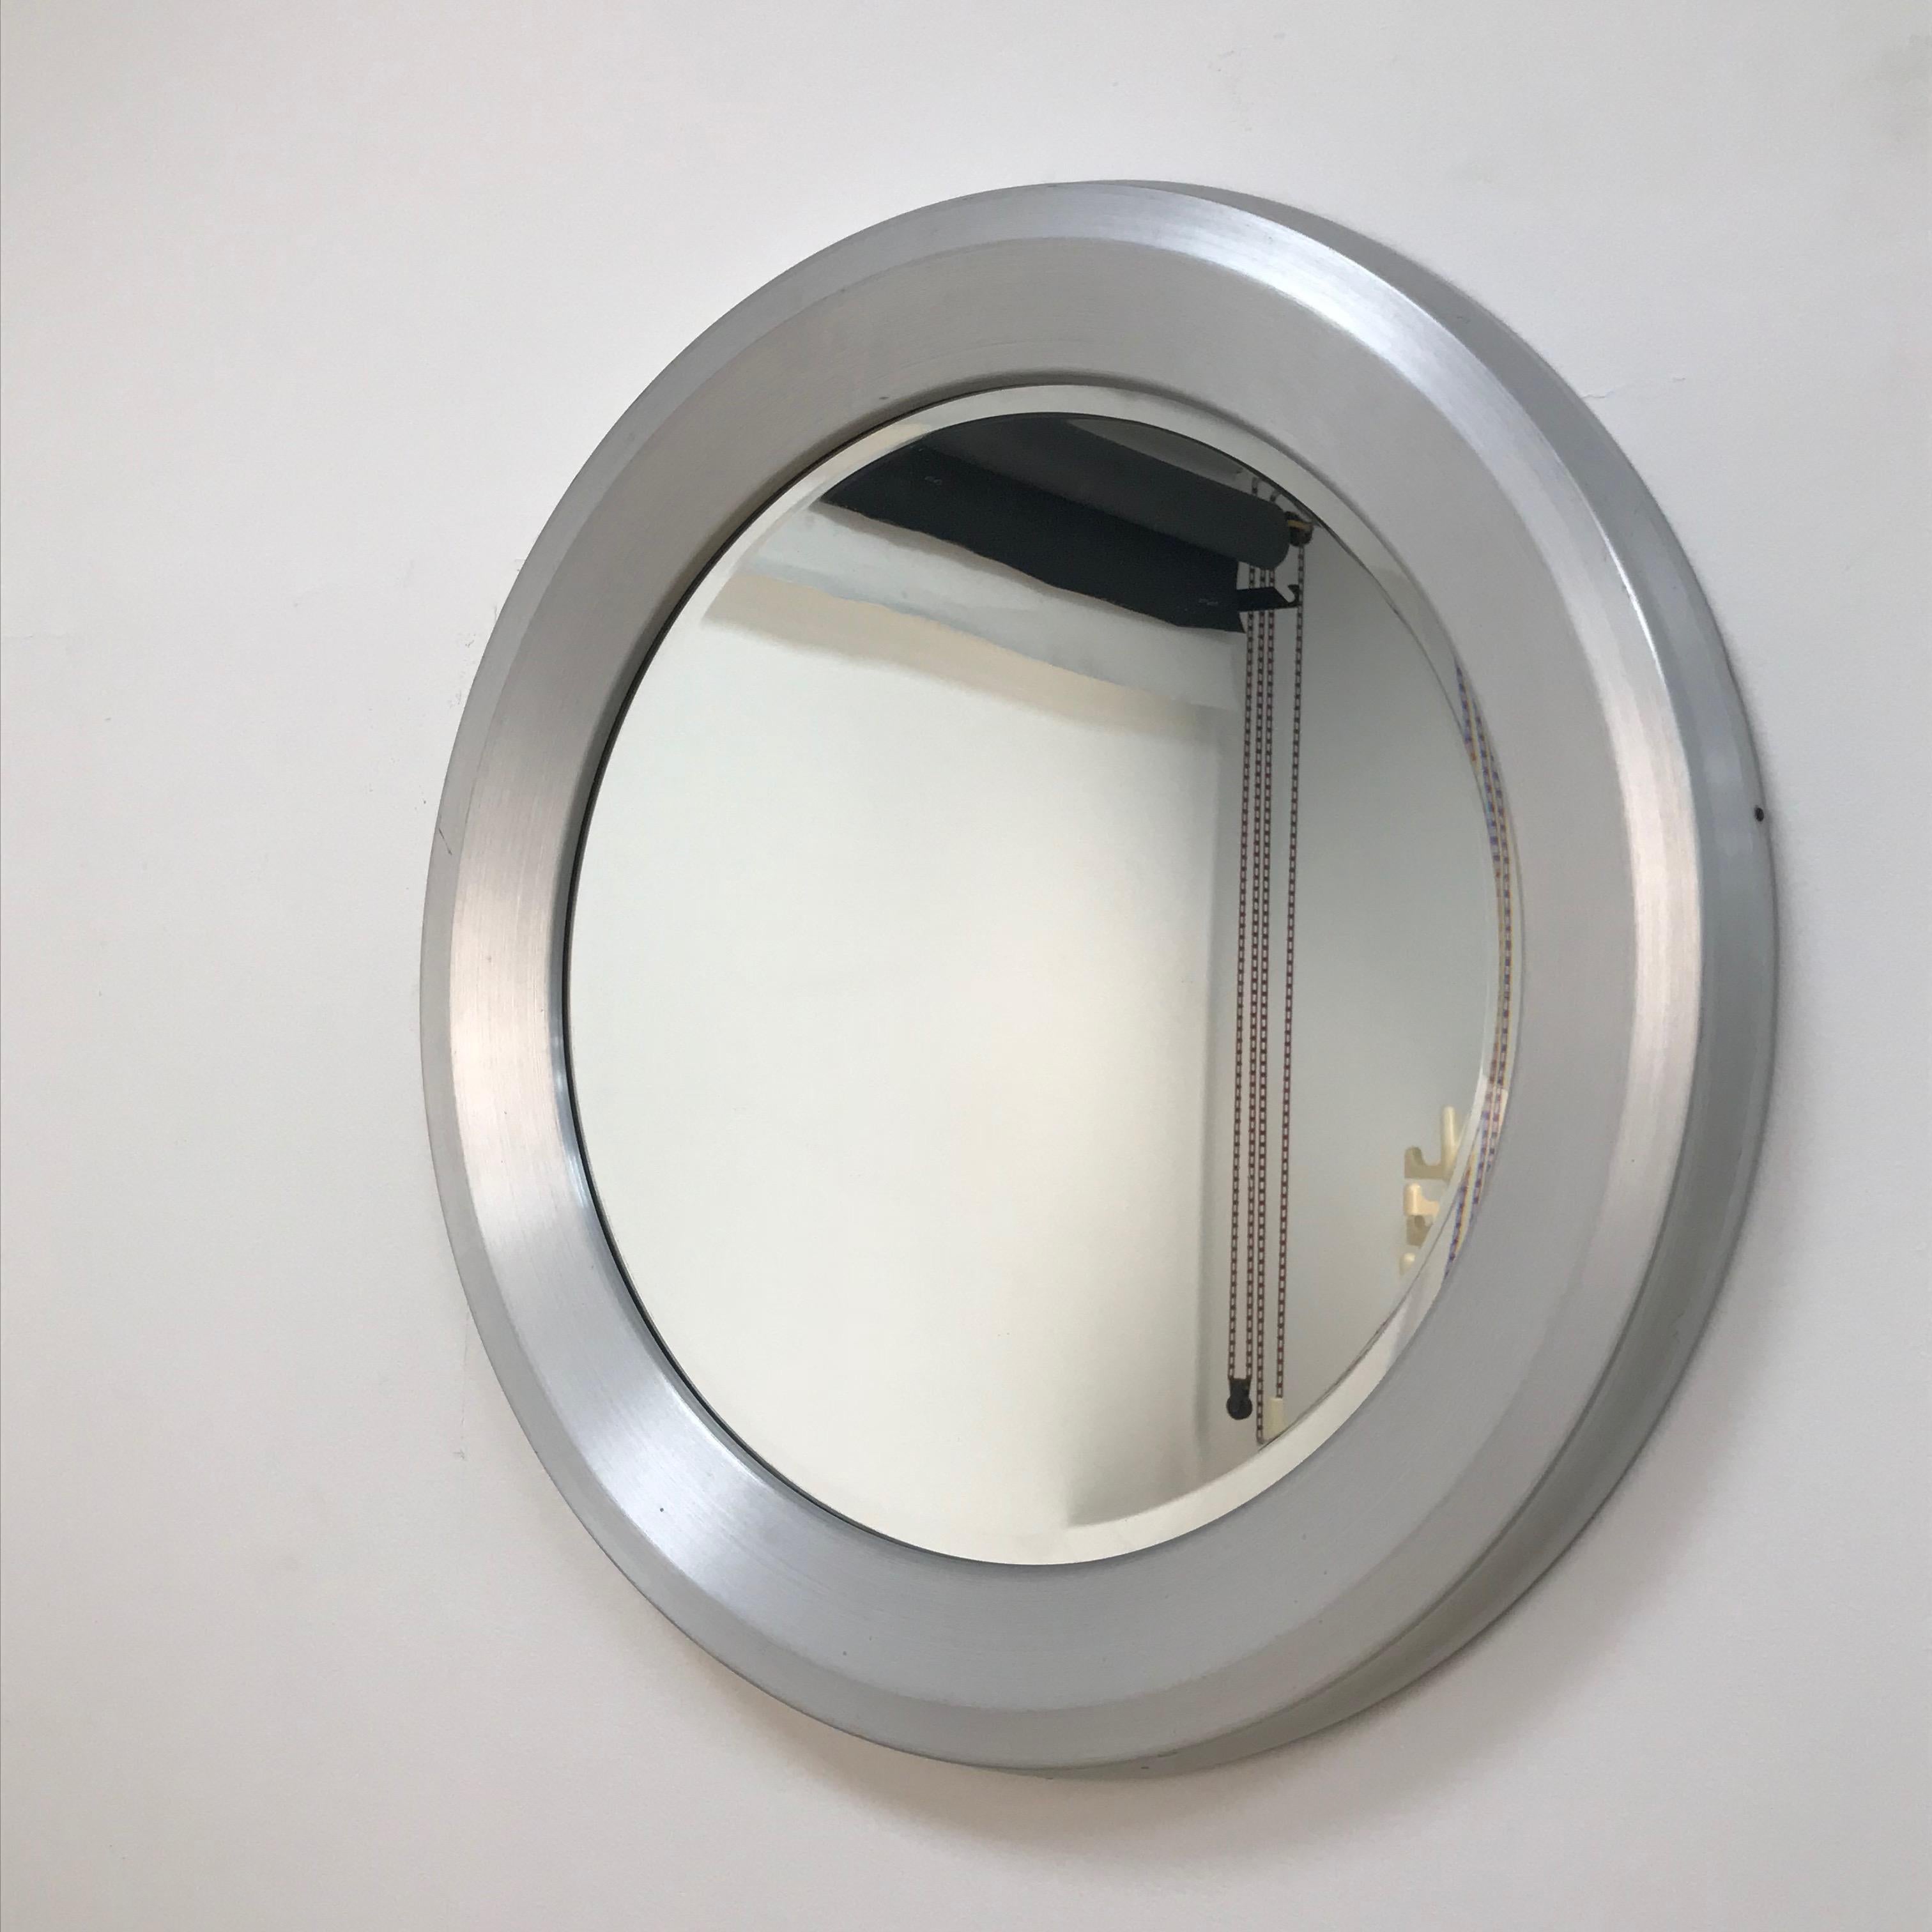 Italian Round Beveled Mirror, Aluminum Frame, 1960s Midcentury, Italy, Artemide Style